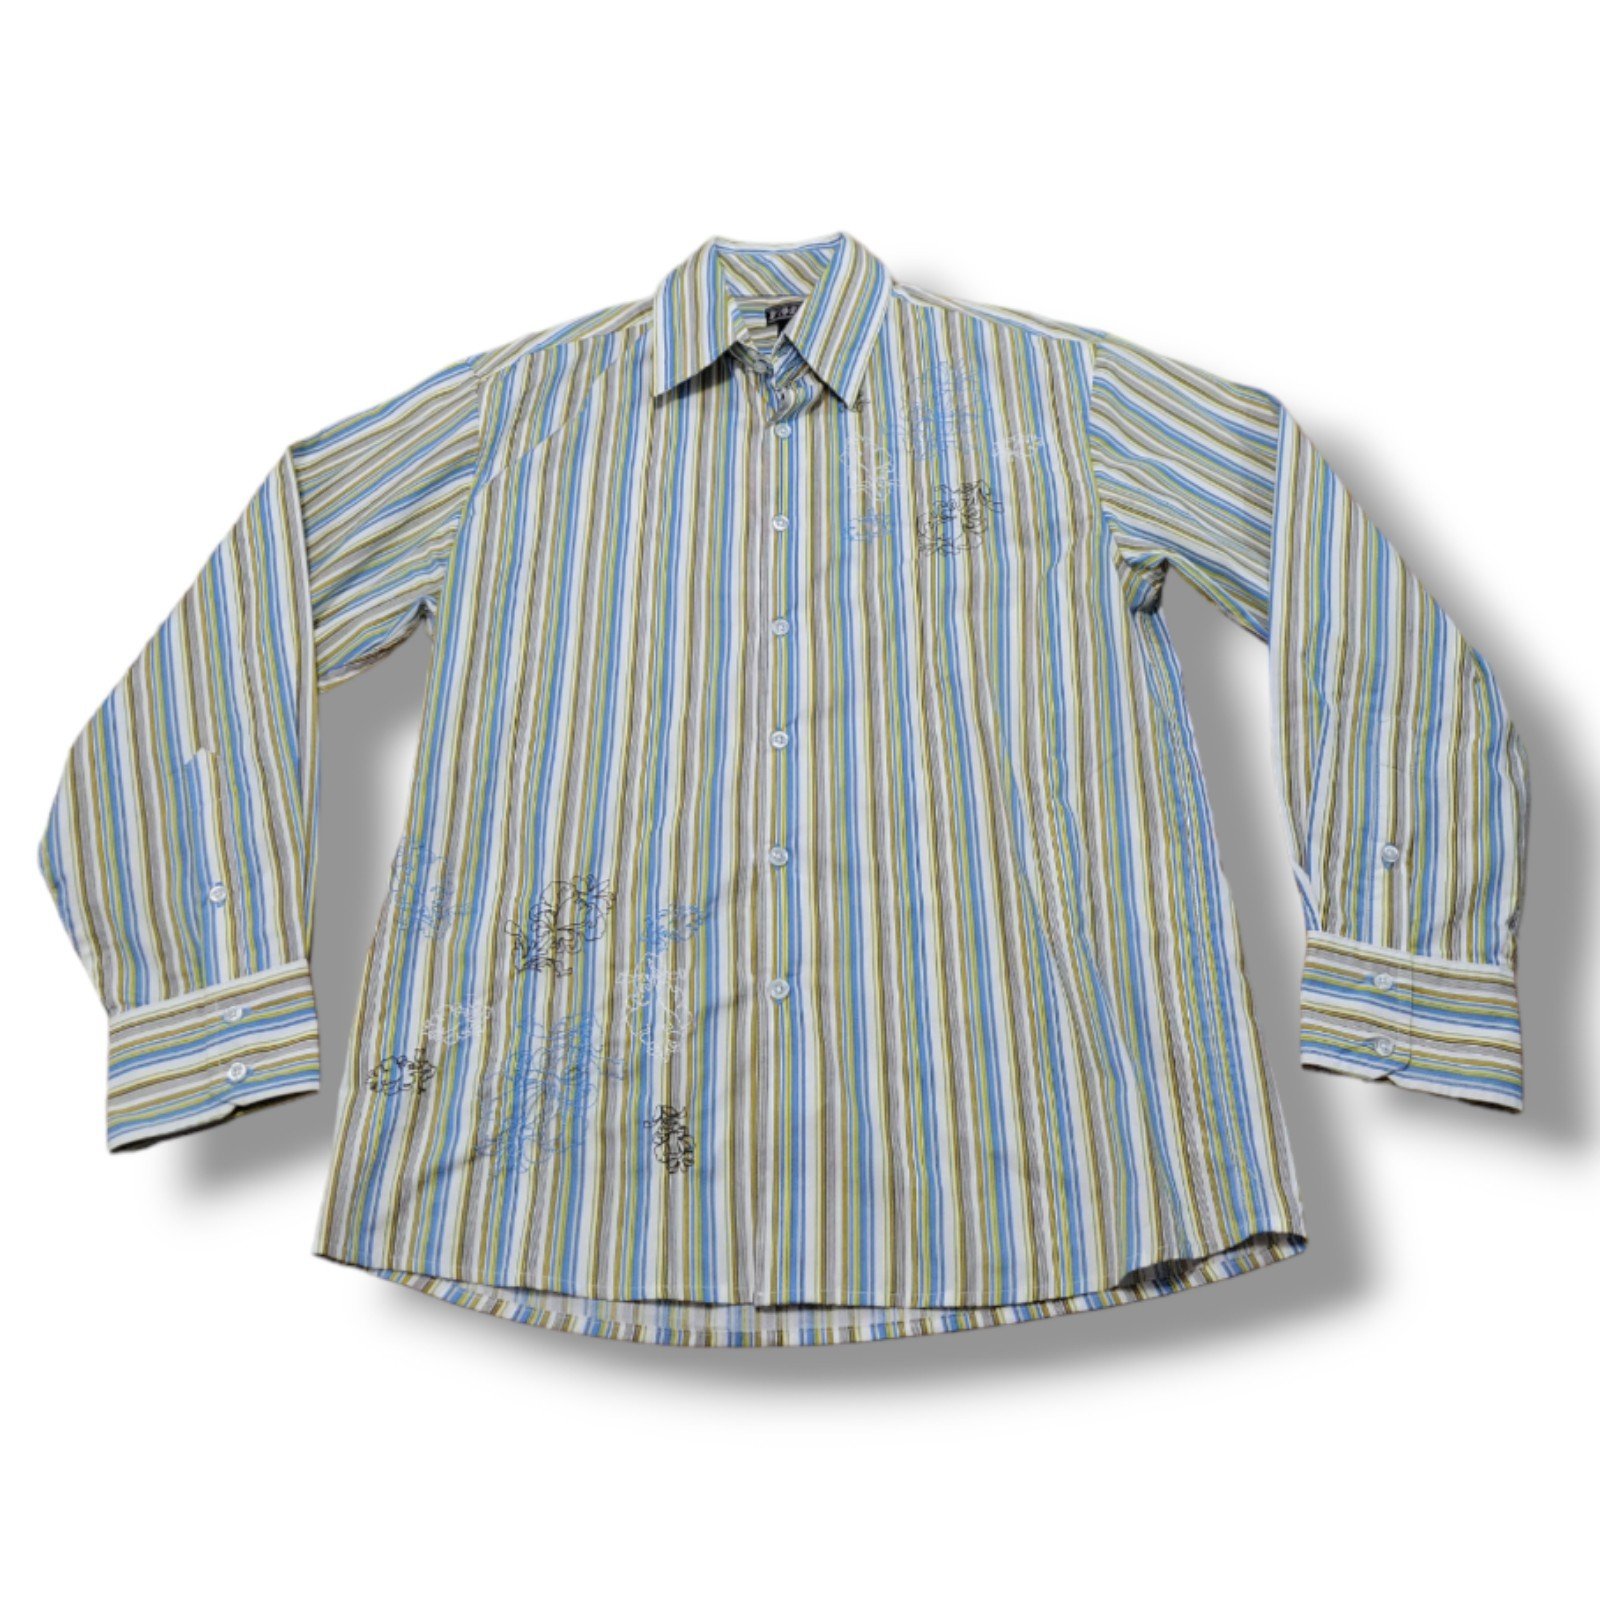 YMLA Shirt Size Medium M Button Down Shirt Long Sleeve Floral Embroidery Striped I9uZGHX9L